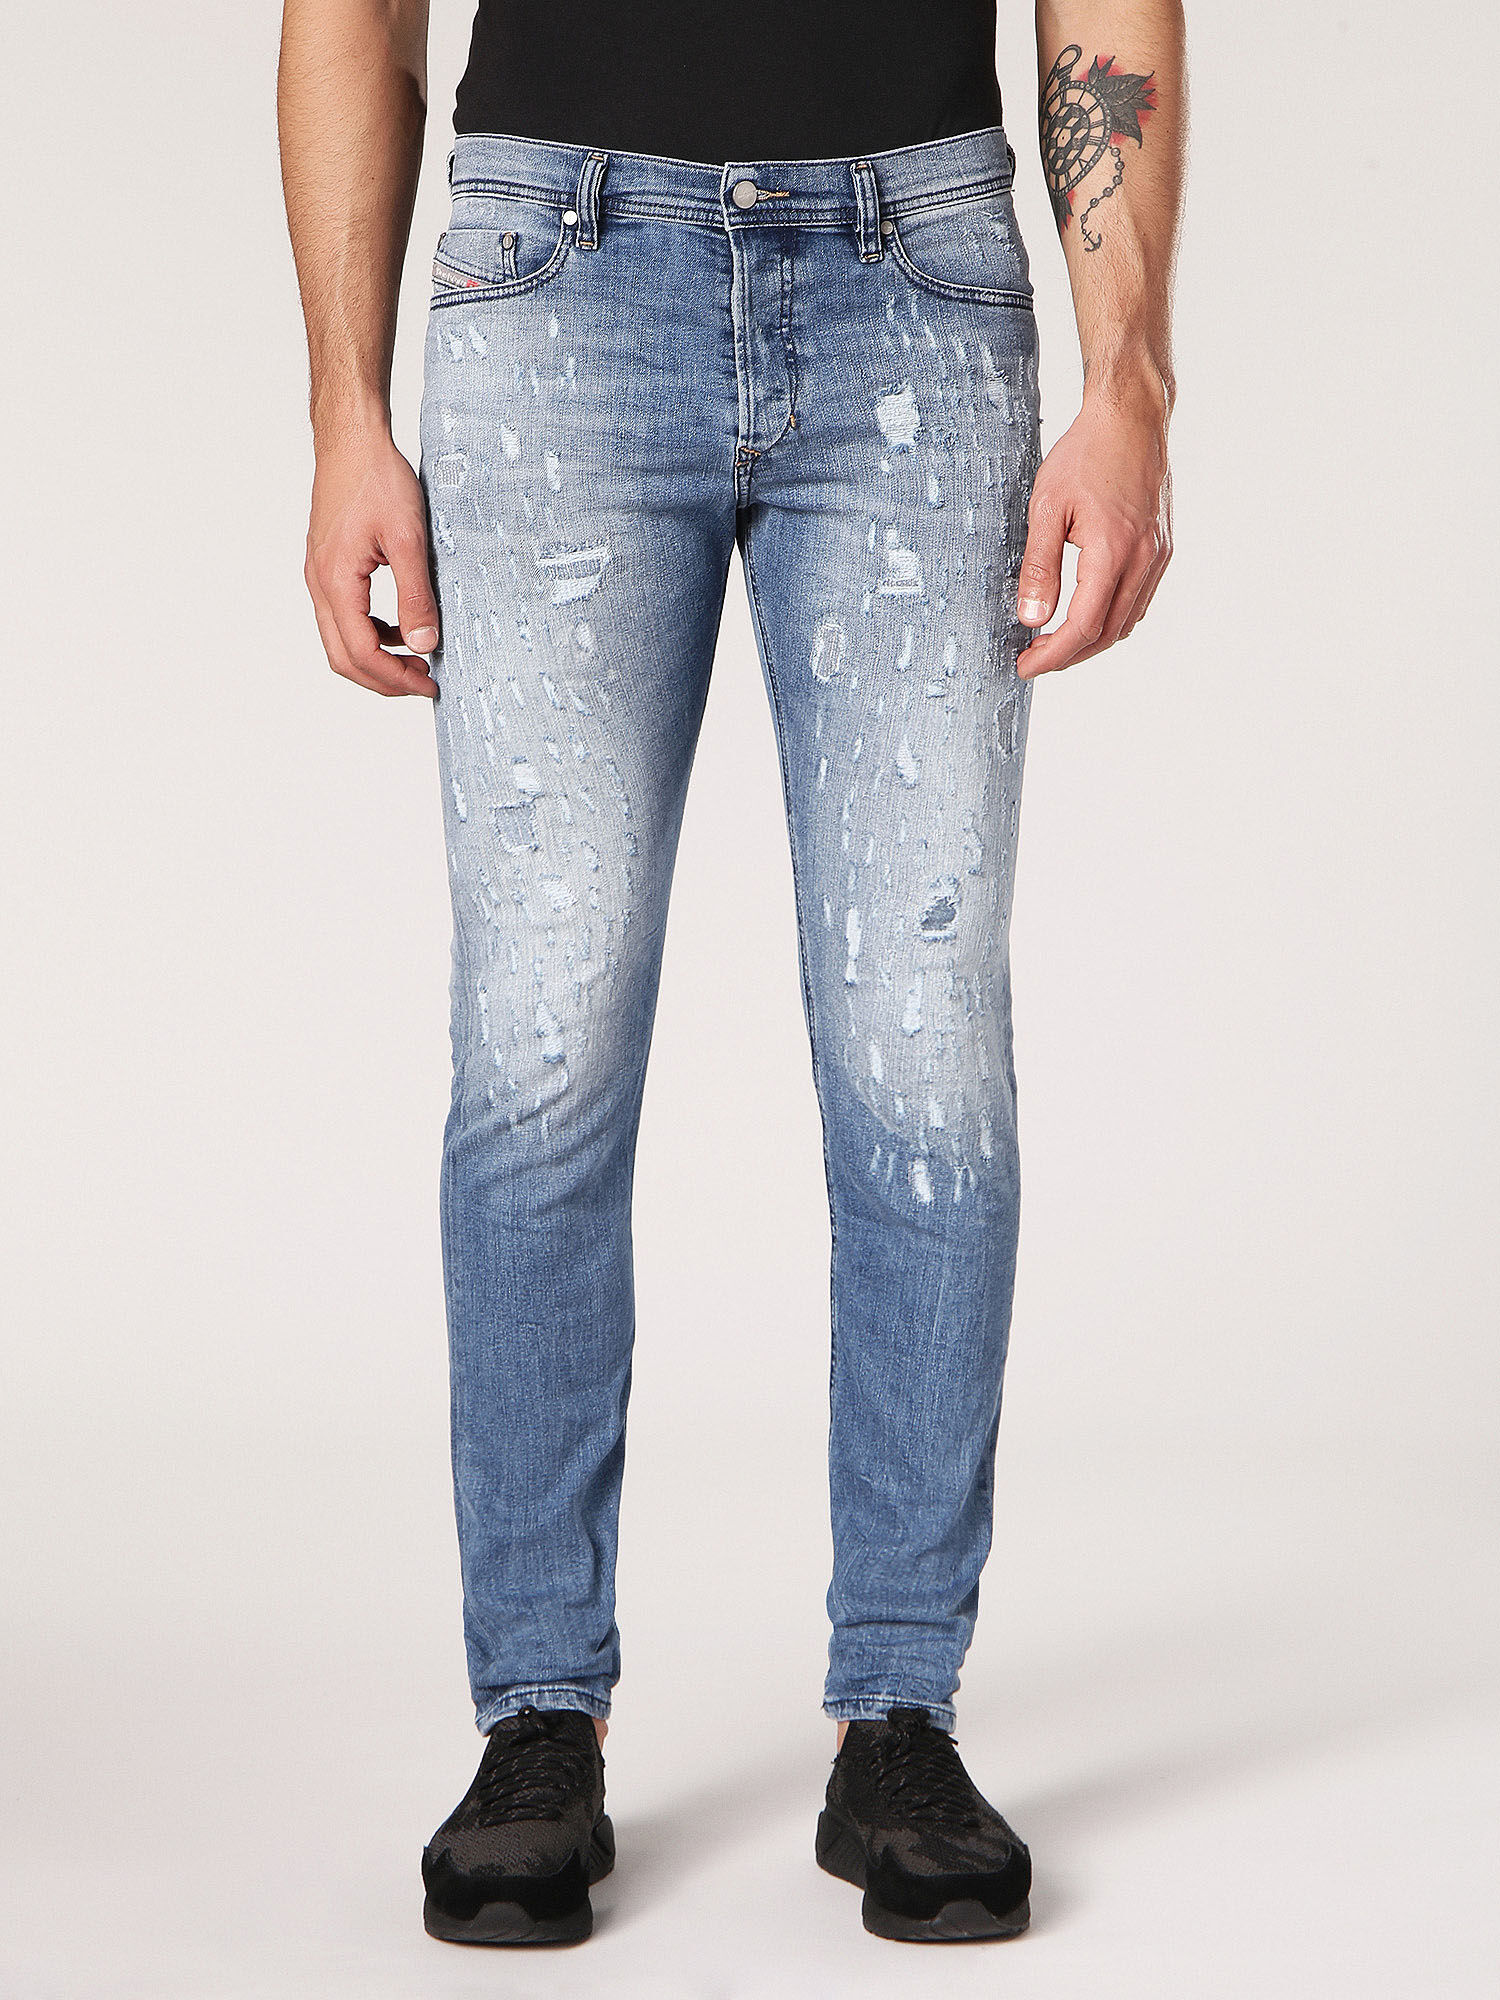 marlboro classic jeans price